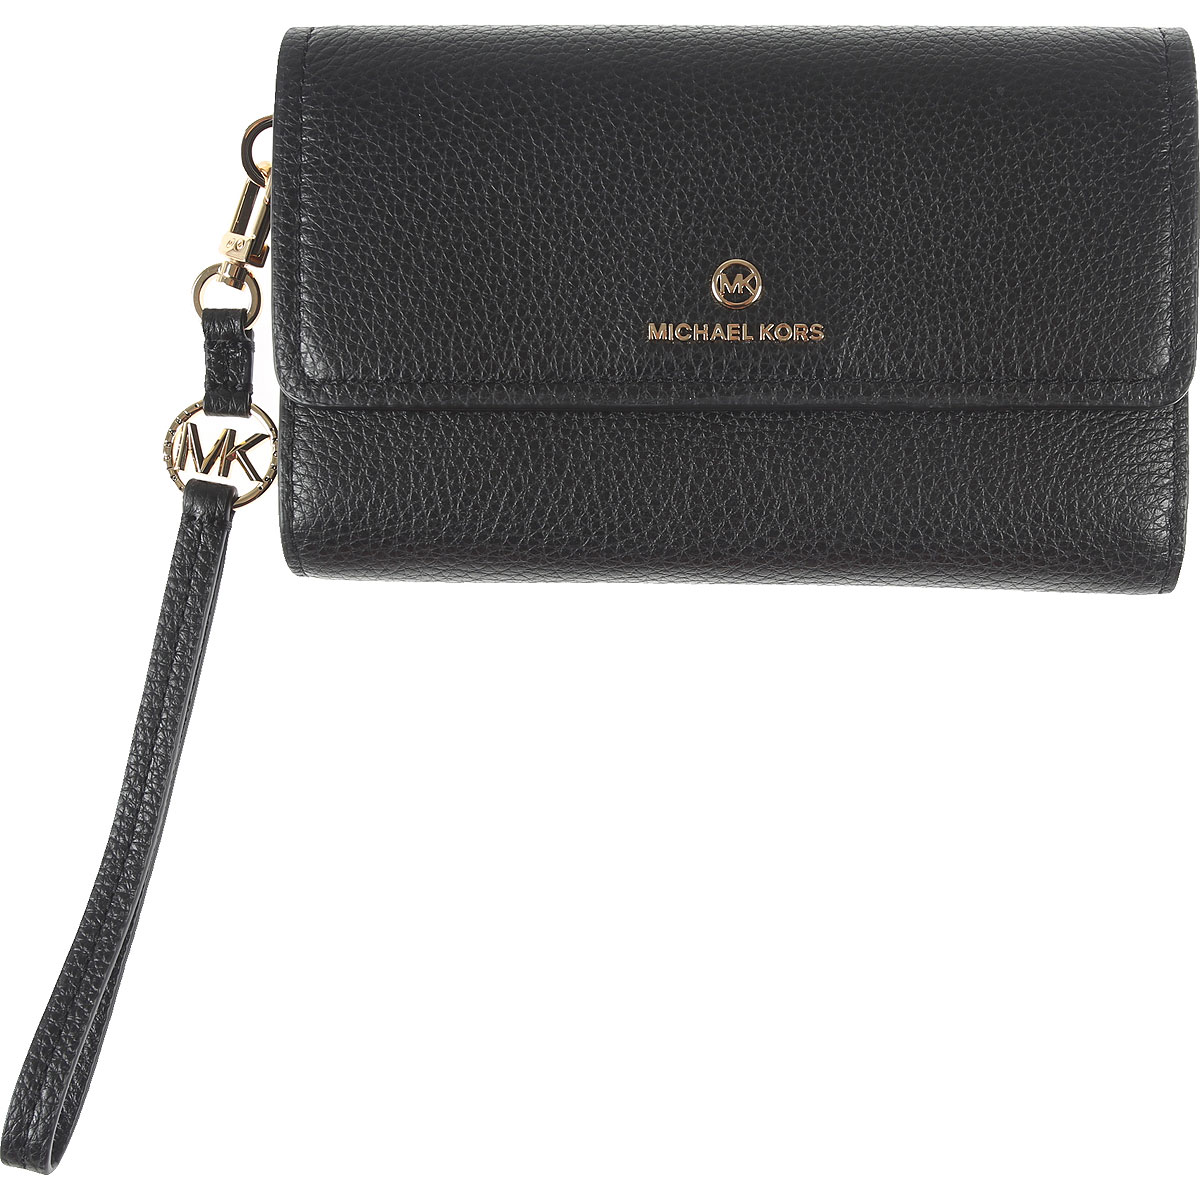 Handbags Michael Kors, Style code: 34s2gt9w7l-001-